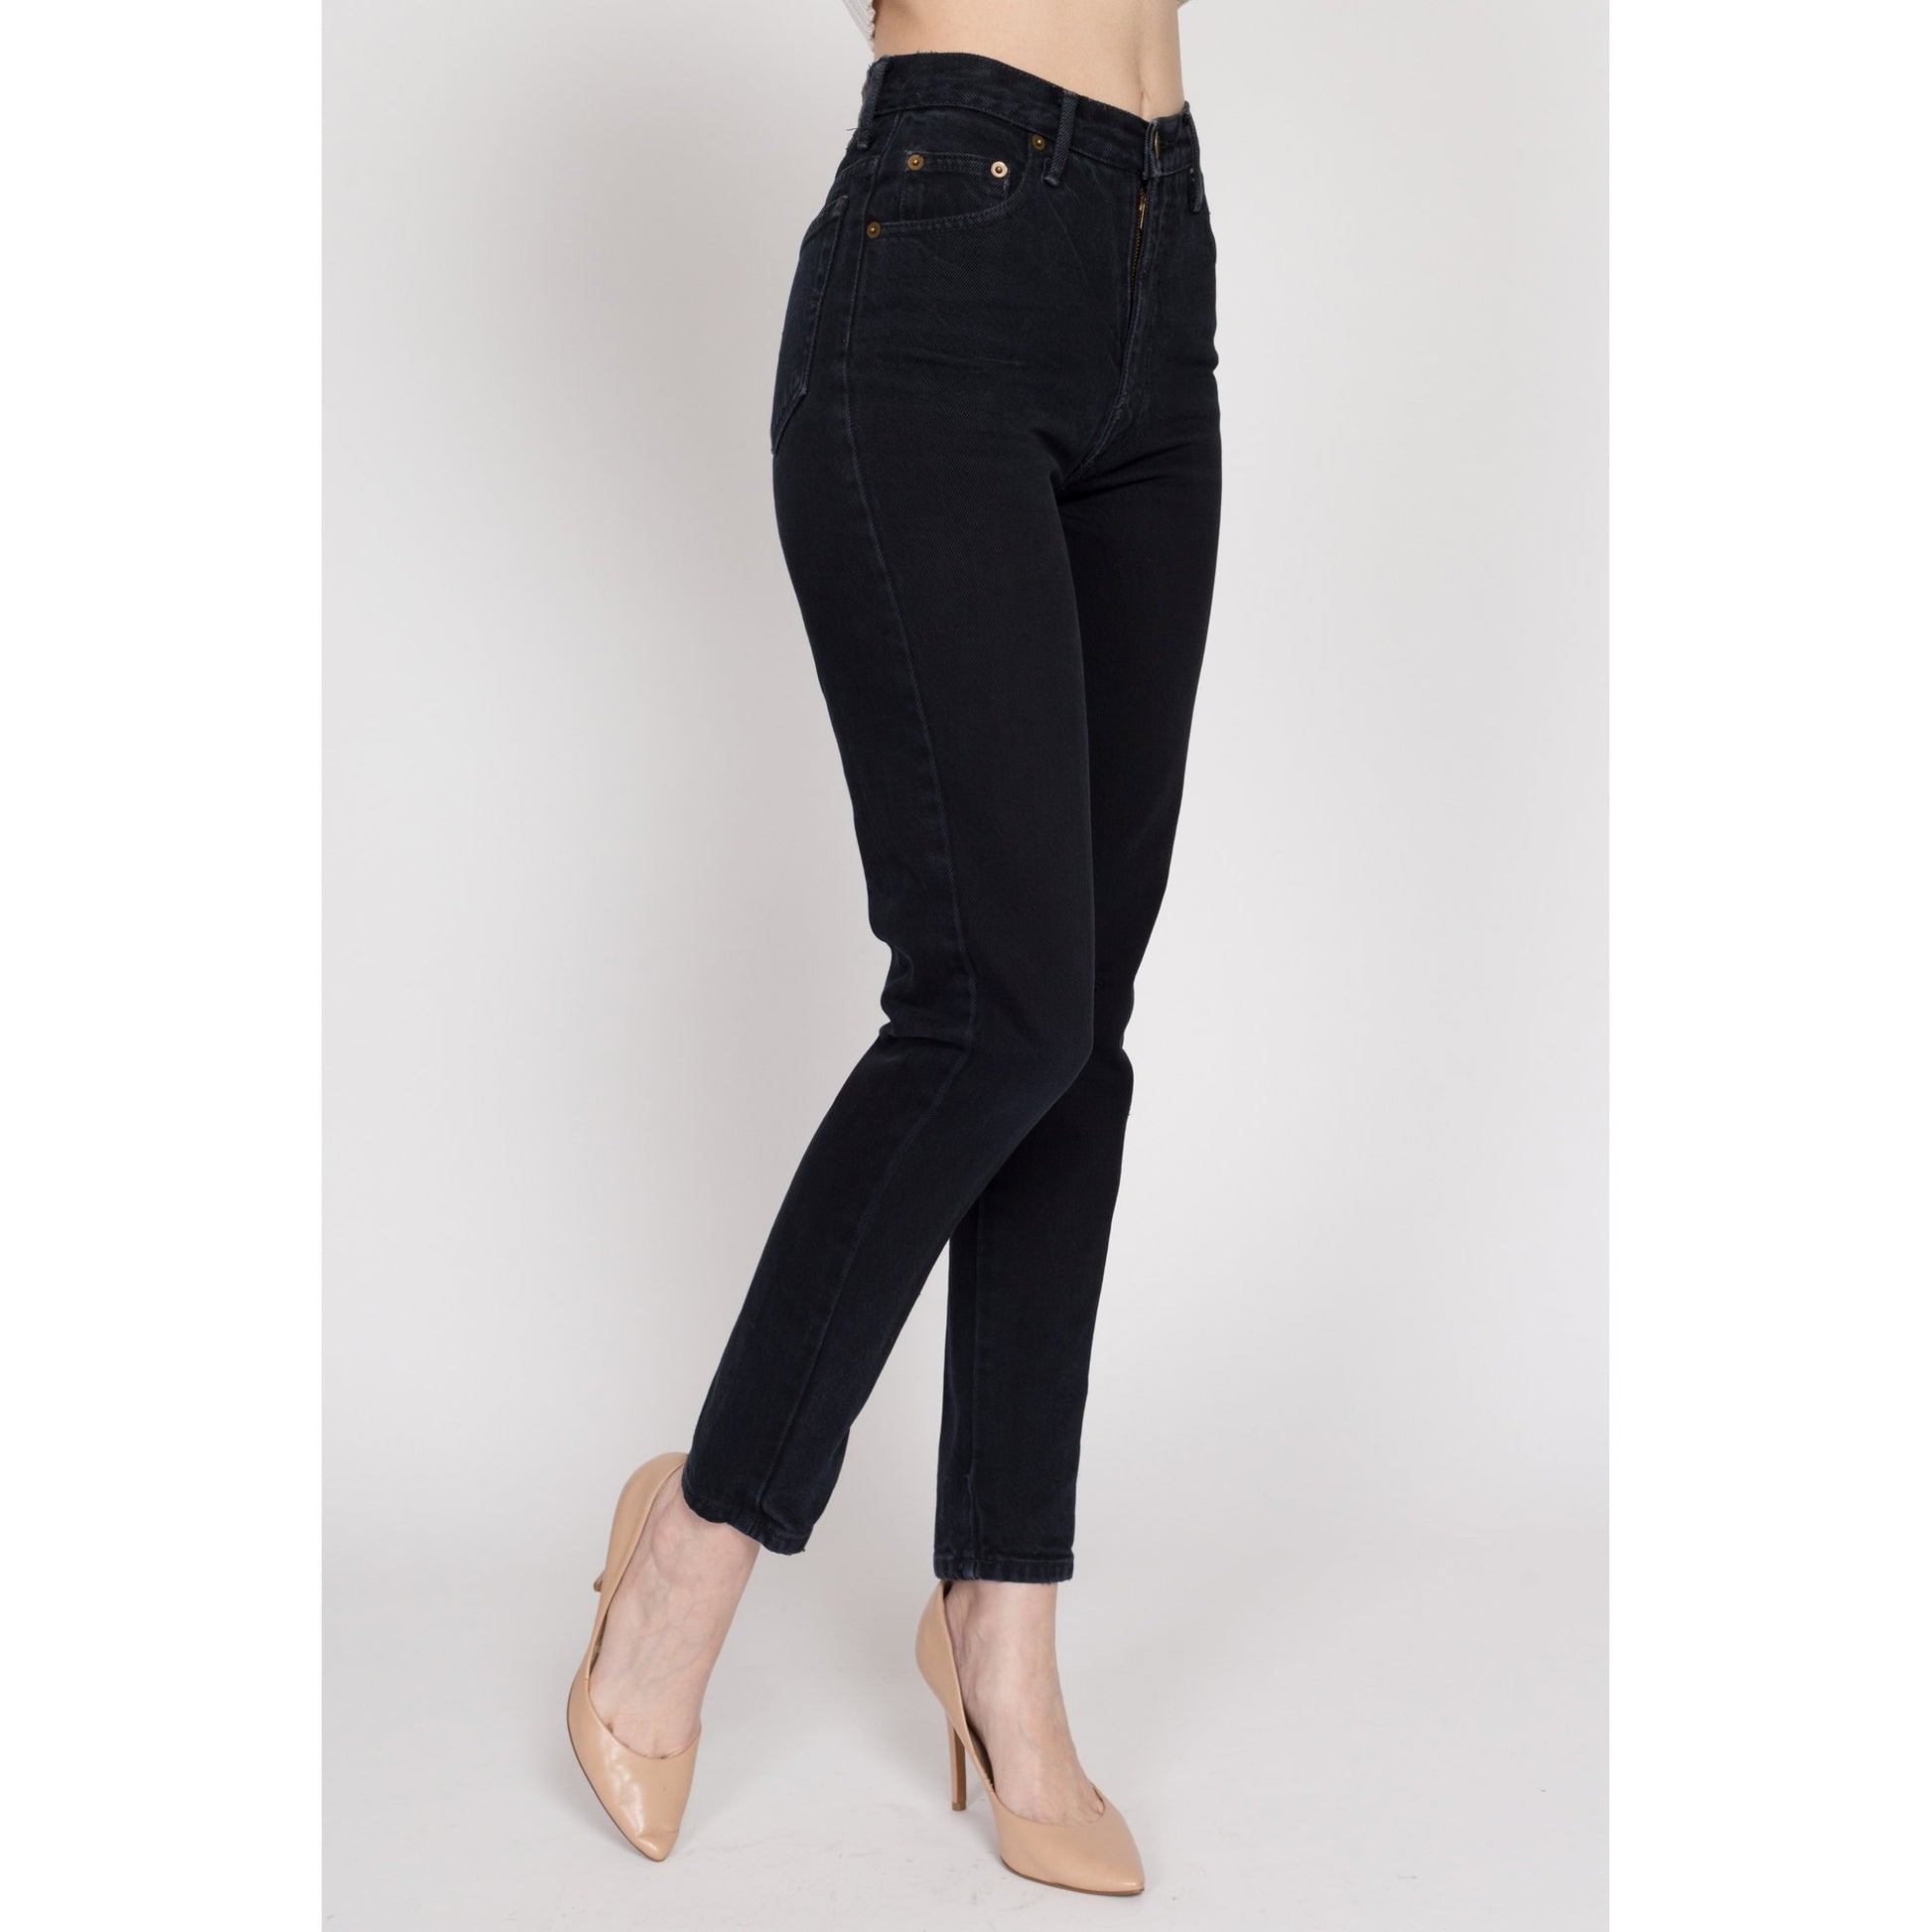 XS 90s Black High Waisted Jeans 25" | Vintage Paris Blues Denim Tapered Leg Slim Skinny Mom Jeans